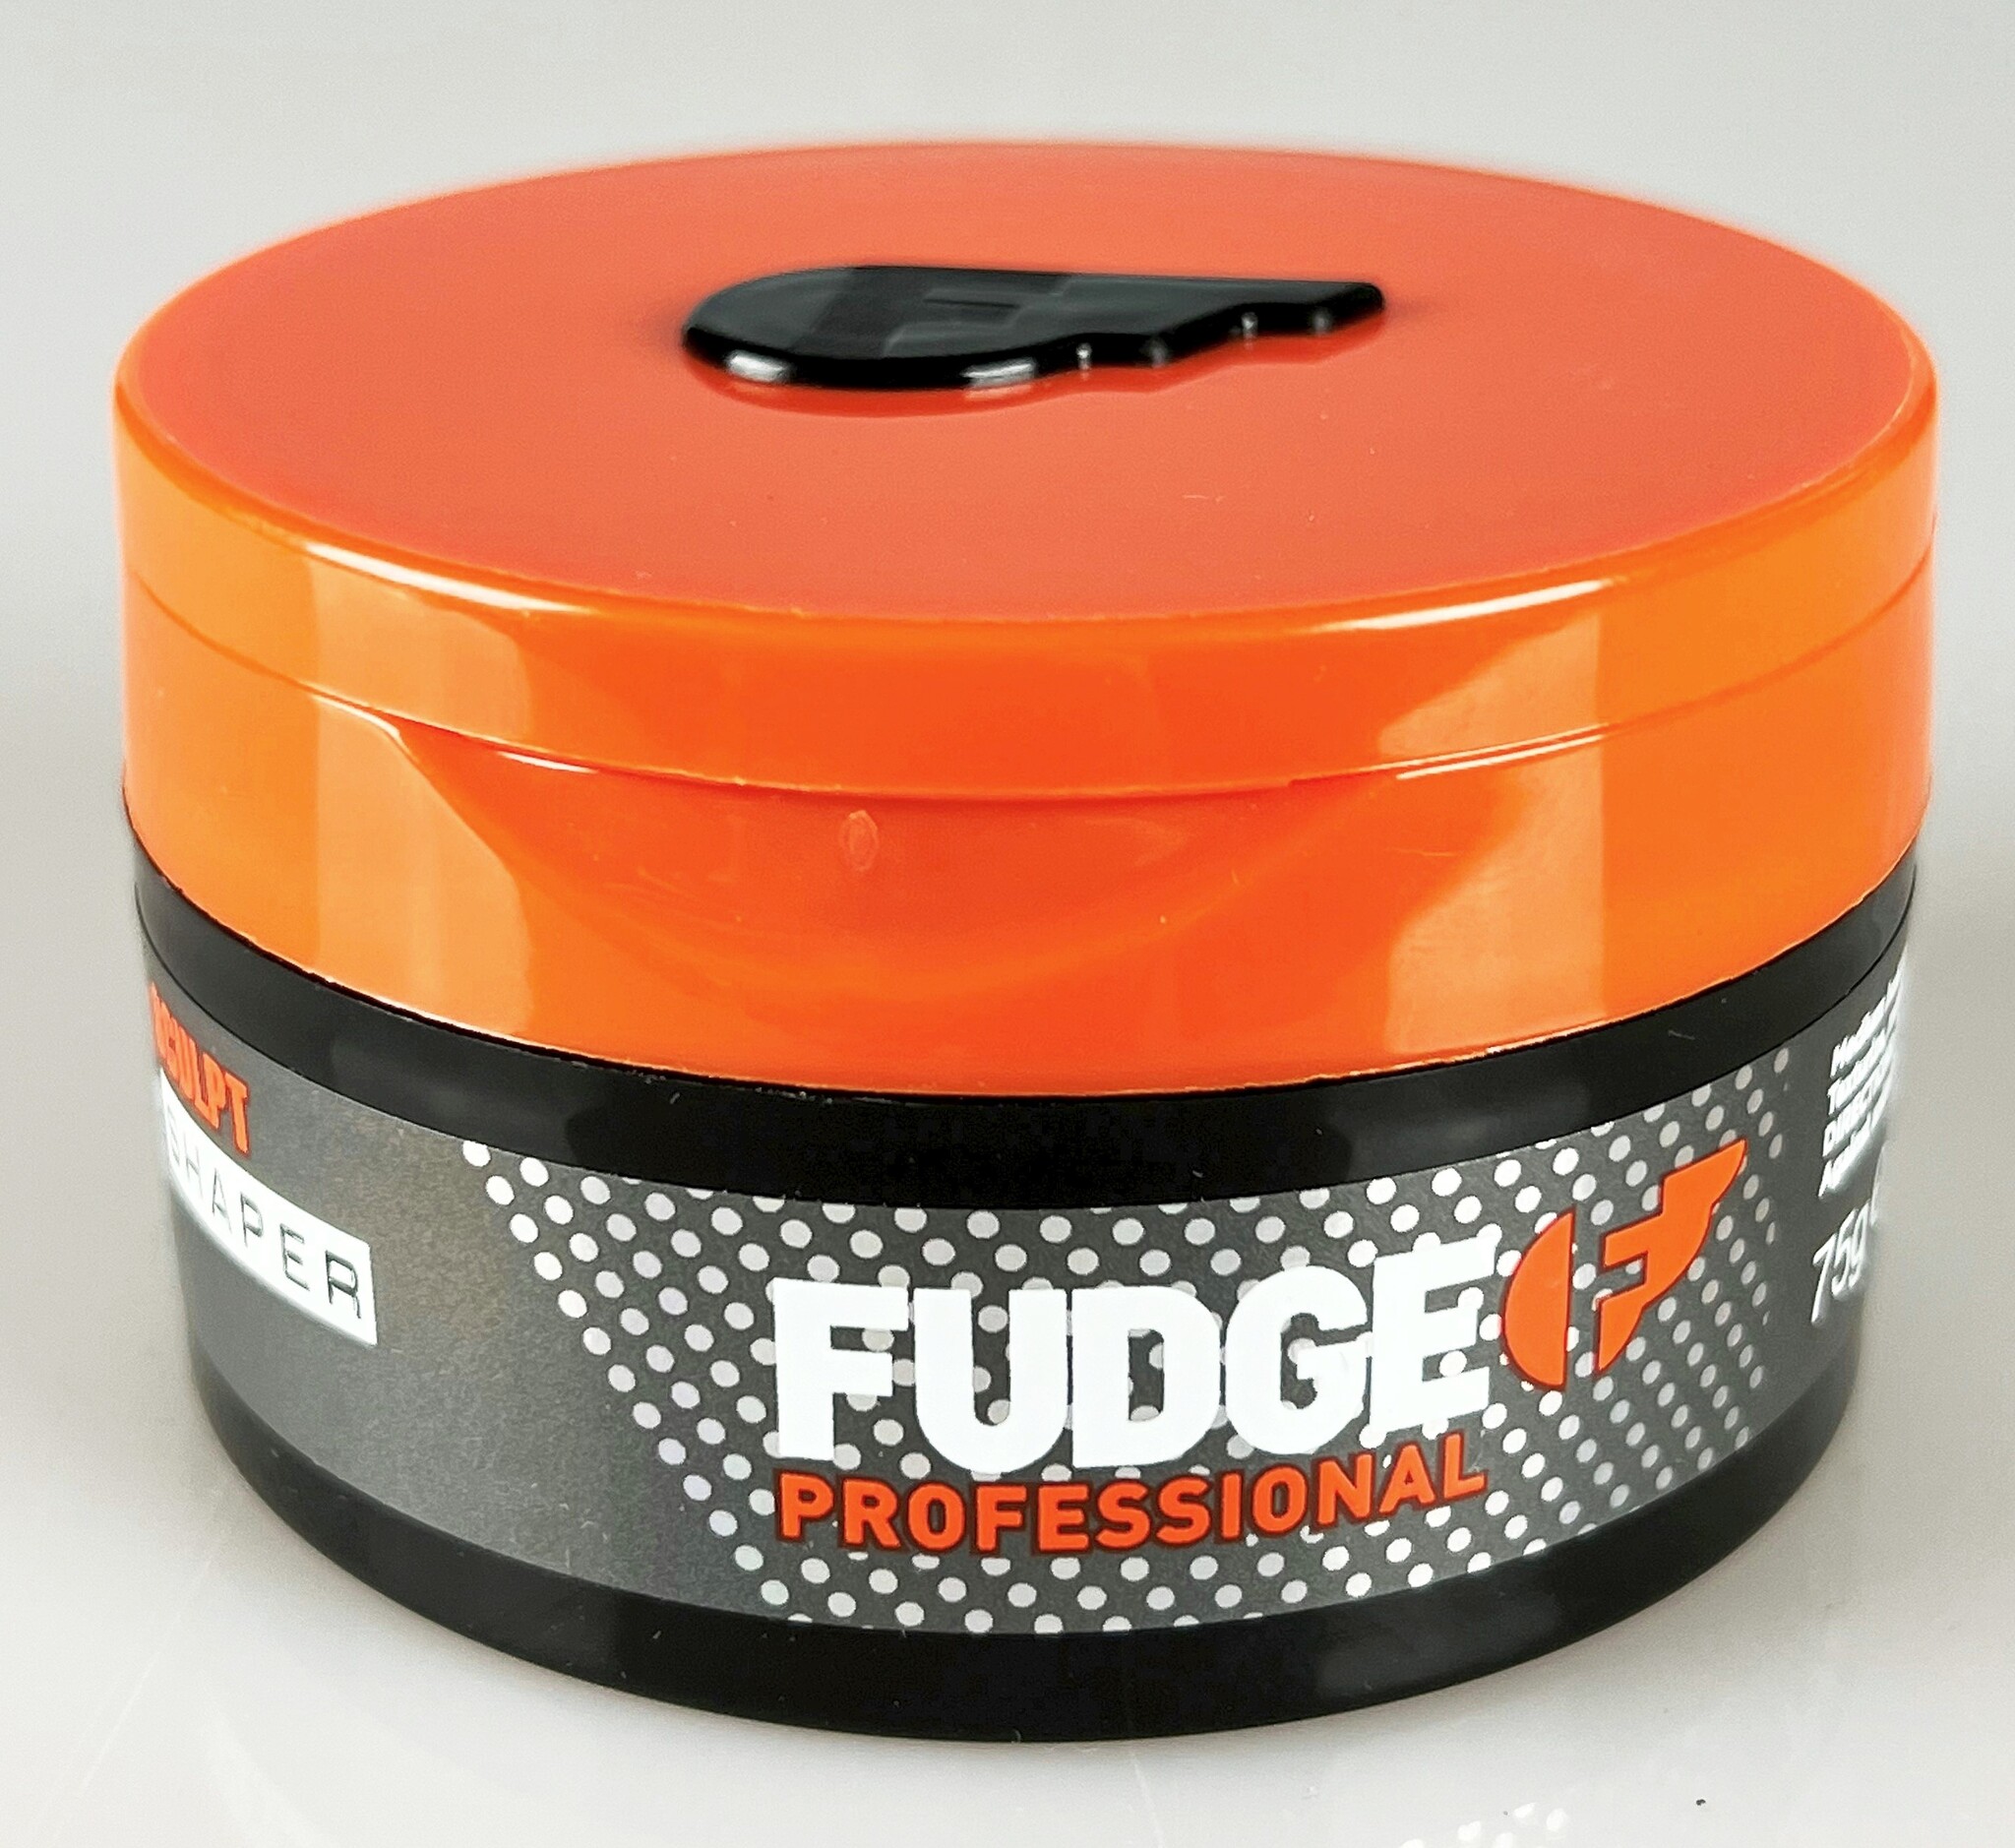 Fudge Hair Shaper - Styling crème 75 gr